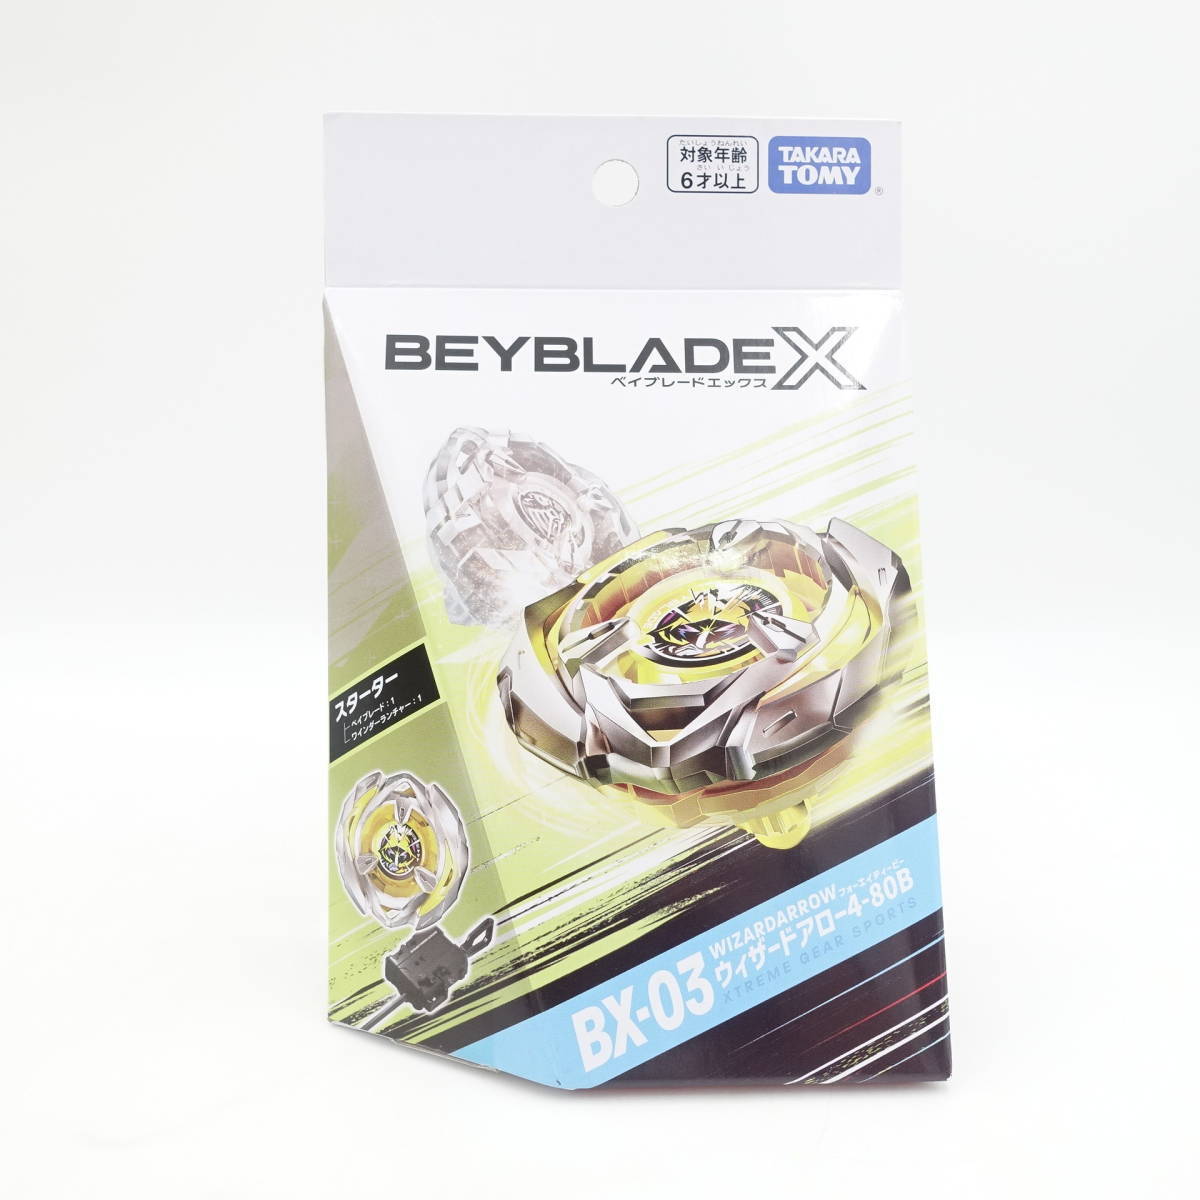 BEYBLADE X ベイブレードX BX-03 スターター ウィザードアロー 4-80B 未開封 タカラトミー TAKARA TOMY/14579の画像1